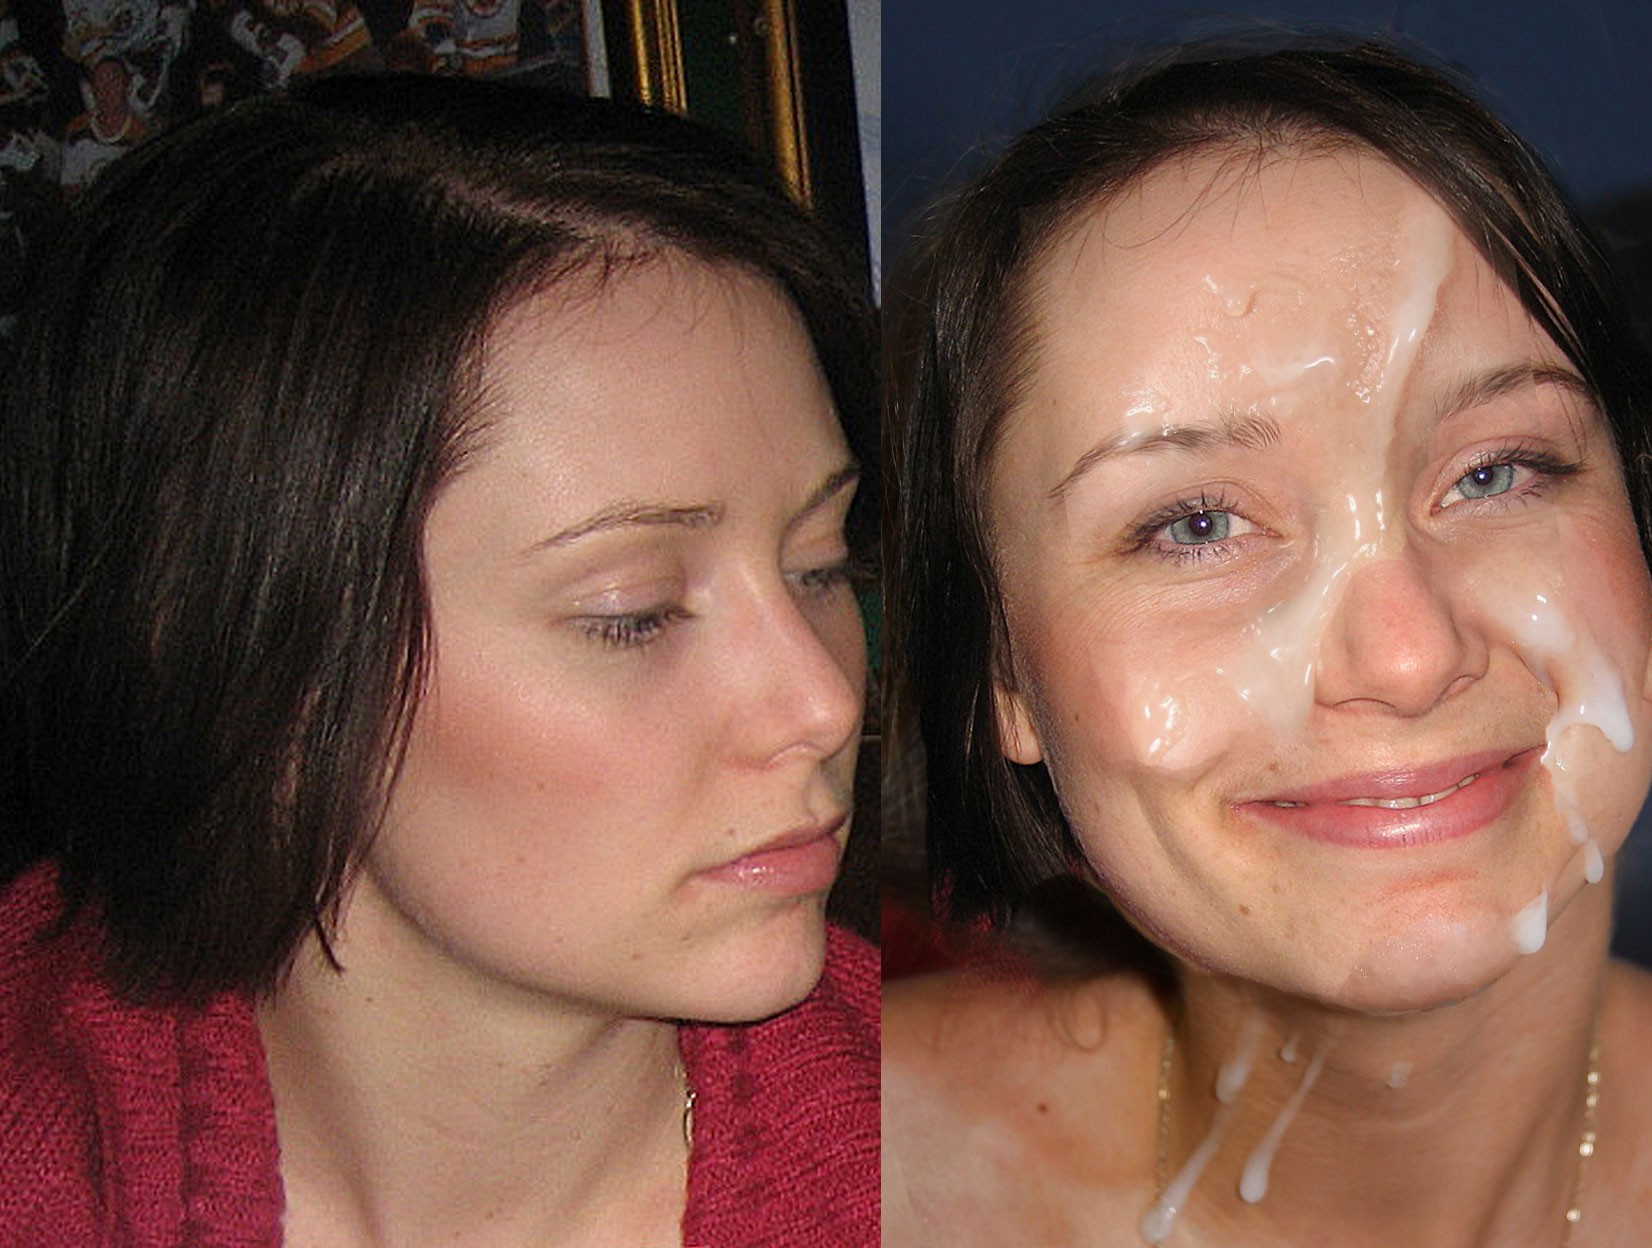 Before / After facial cumshot (49 pictures) - Shooshtime